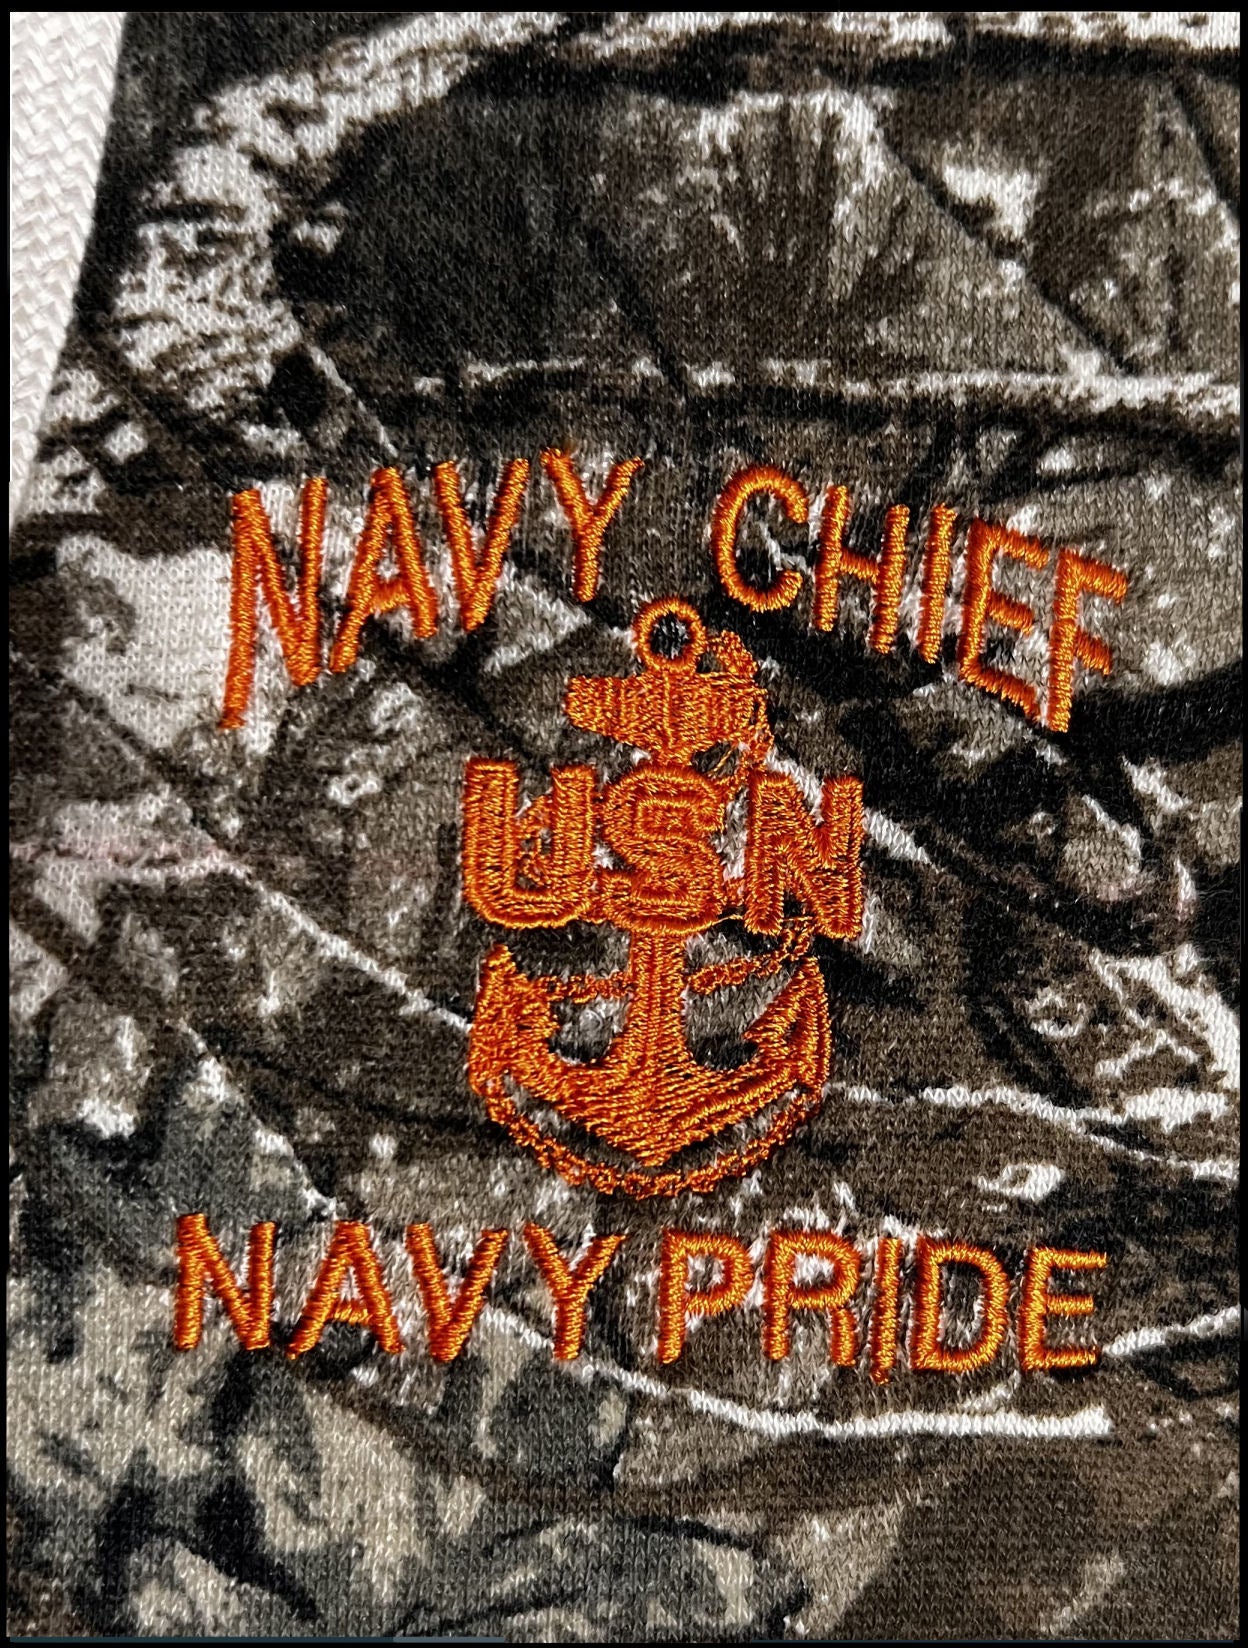 Navy Chief Navy Pride Embroidered Outdoor Camo Hooded Sweatshirt Orange Anchor